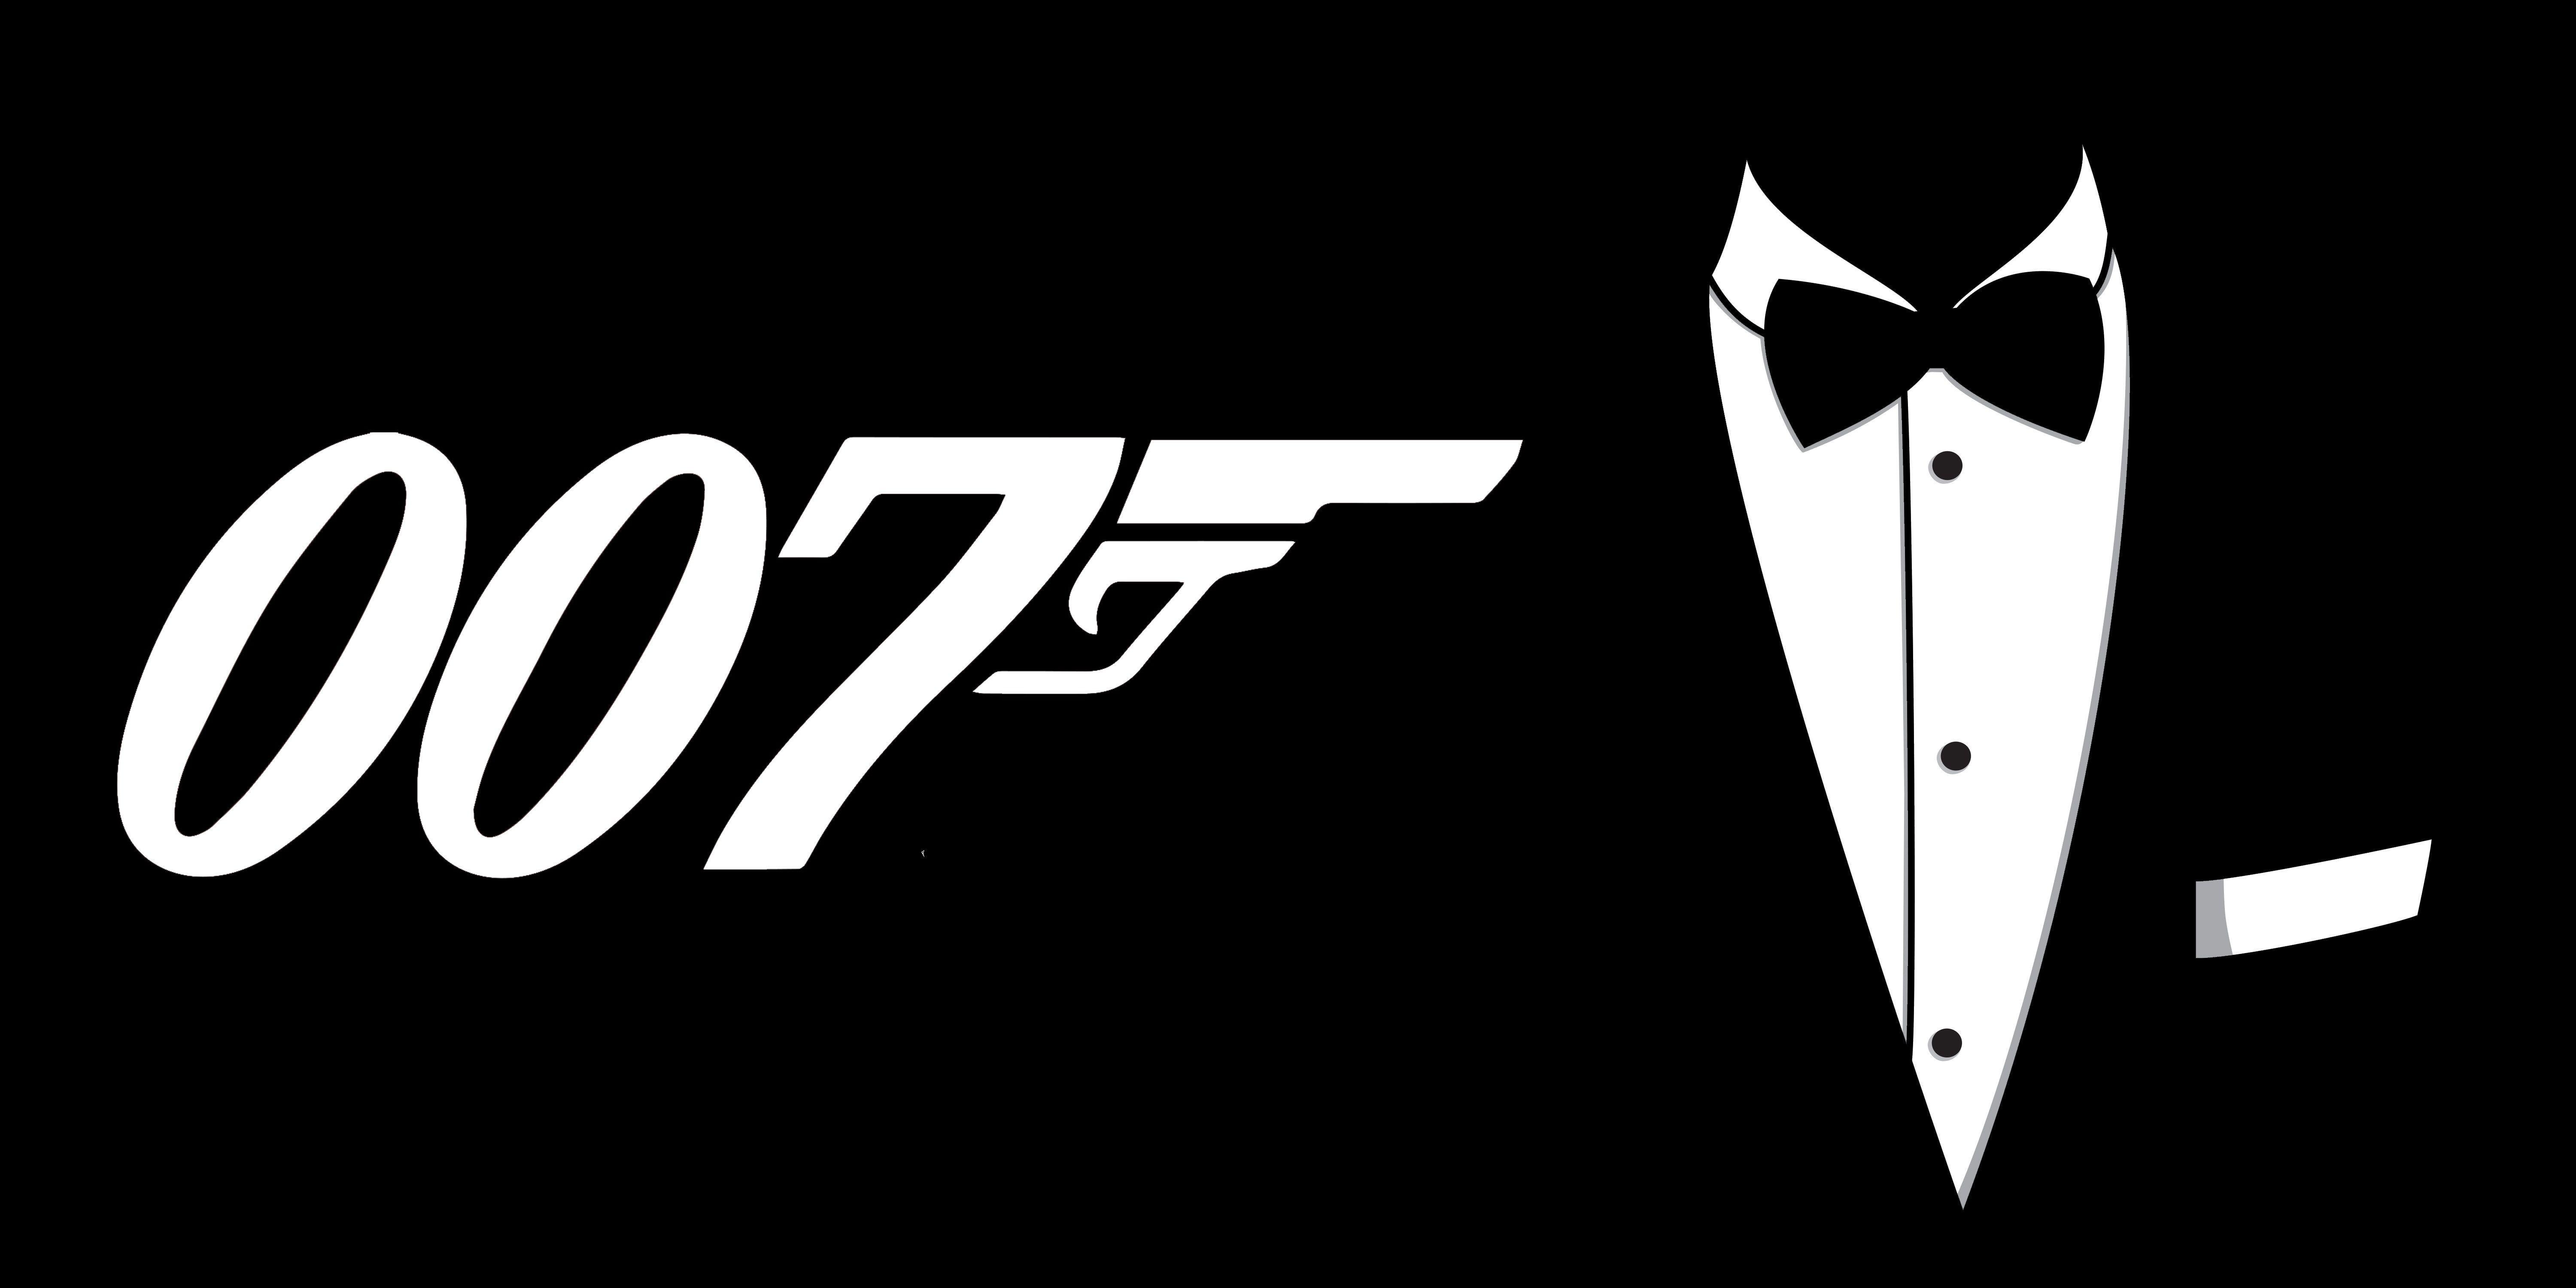 Movies James Bond 007 wallpaper (Desktop, Phone, Tablet)